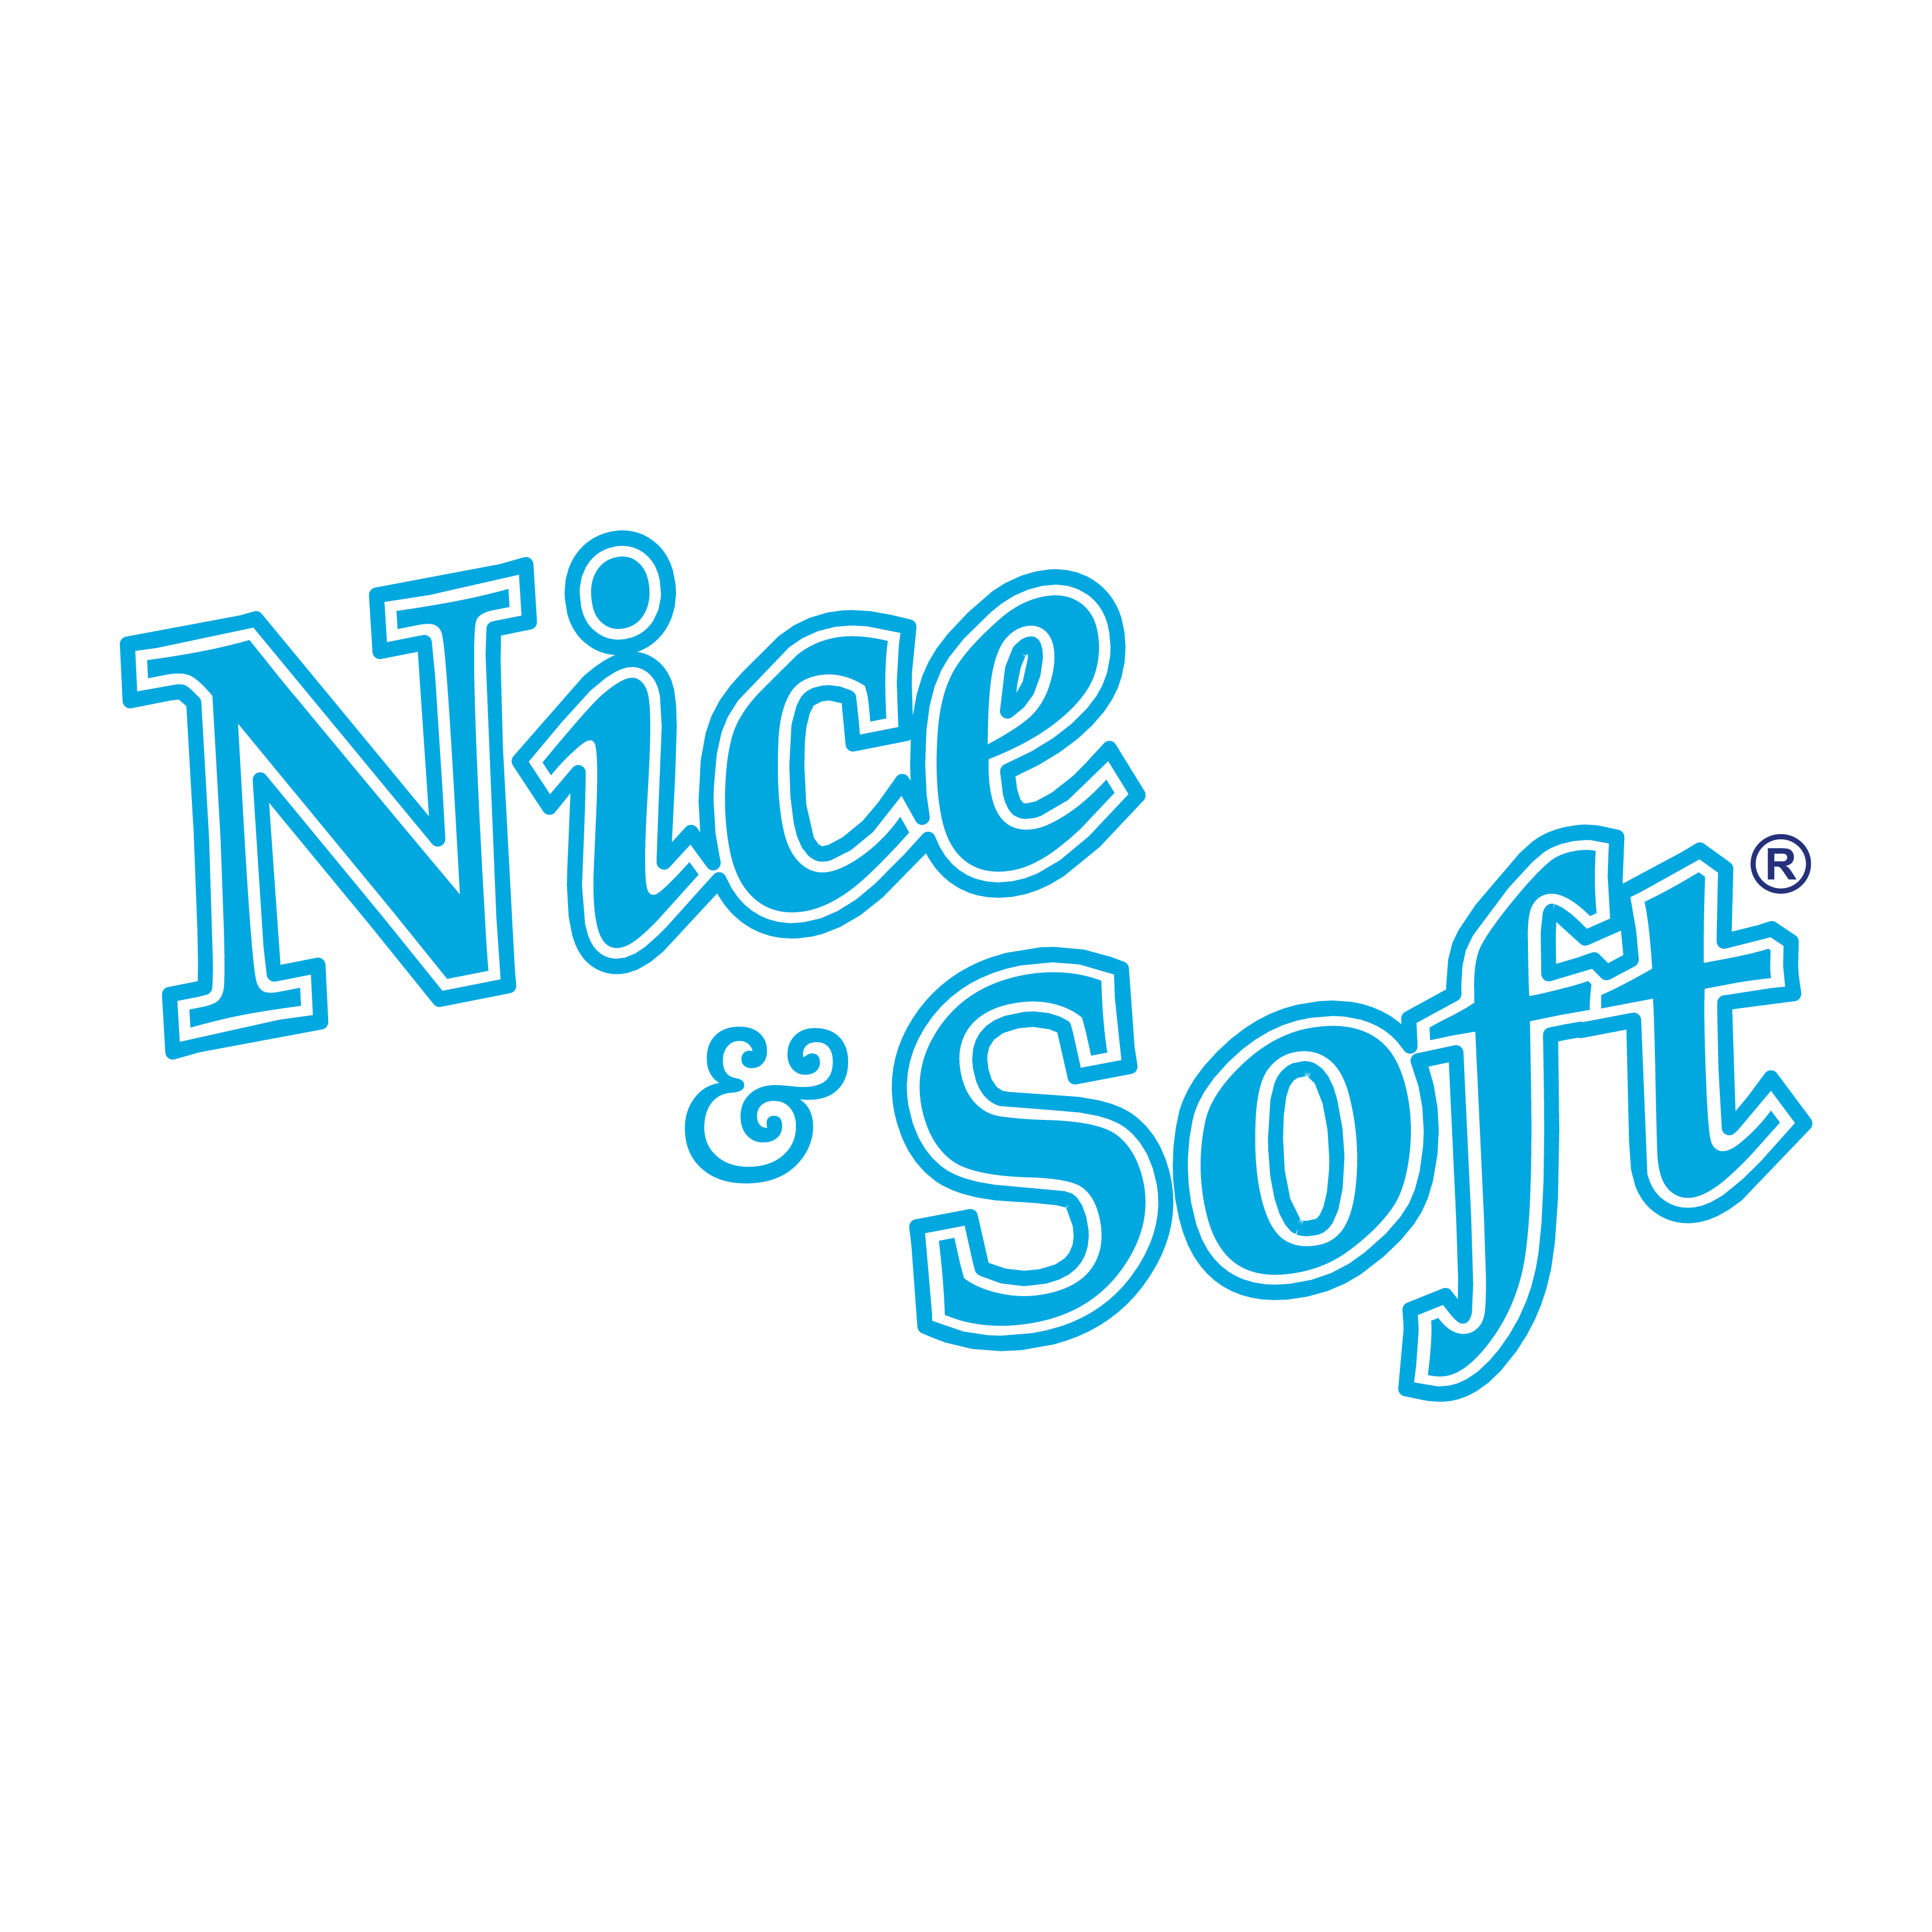 Nice and Soft